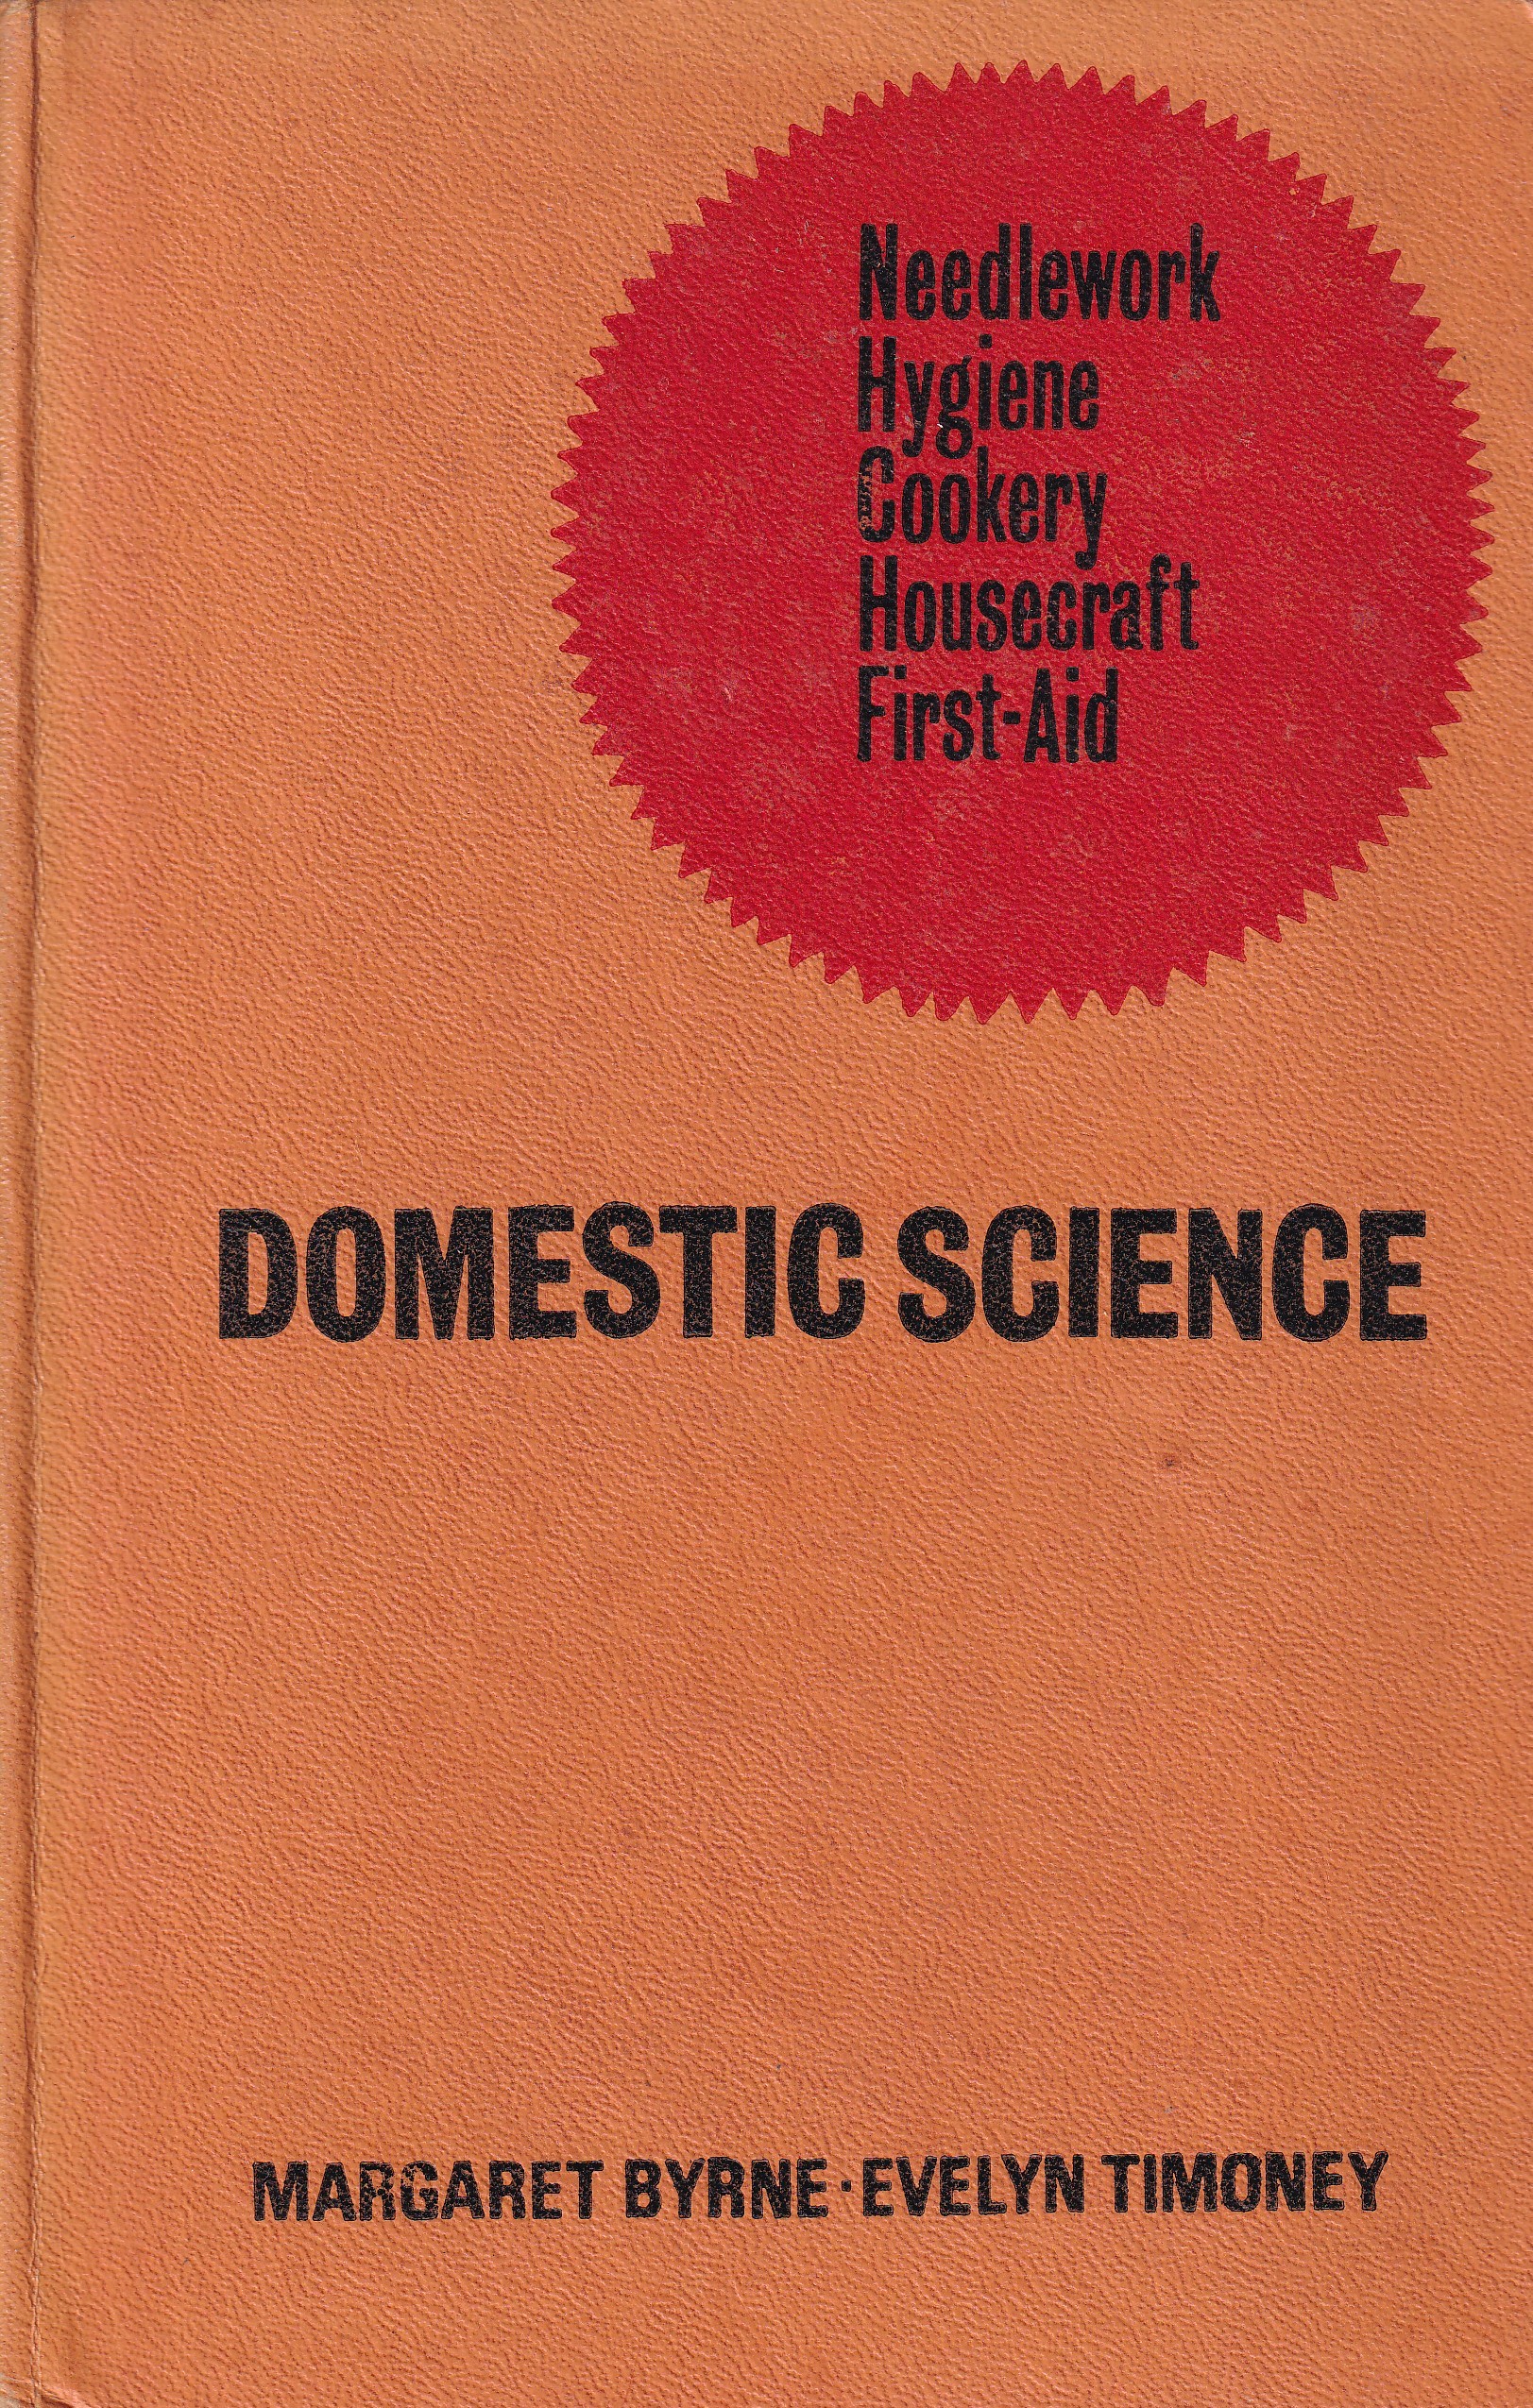 Domestic Science | Margaret Byrne and Evelyn Timoney | Charlie Byrne's